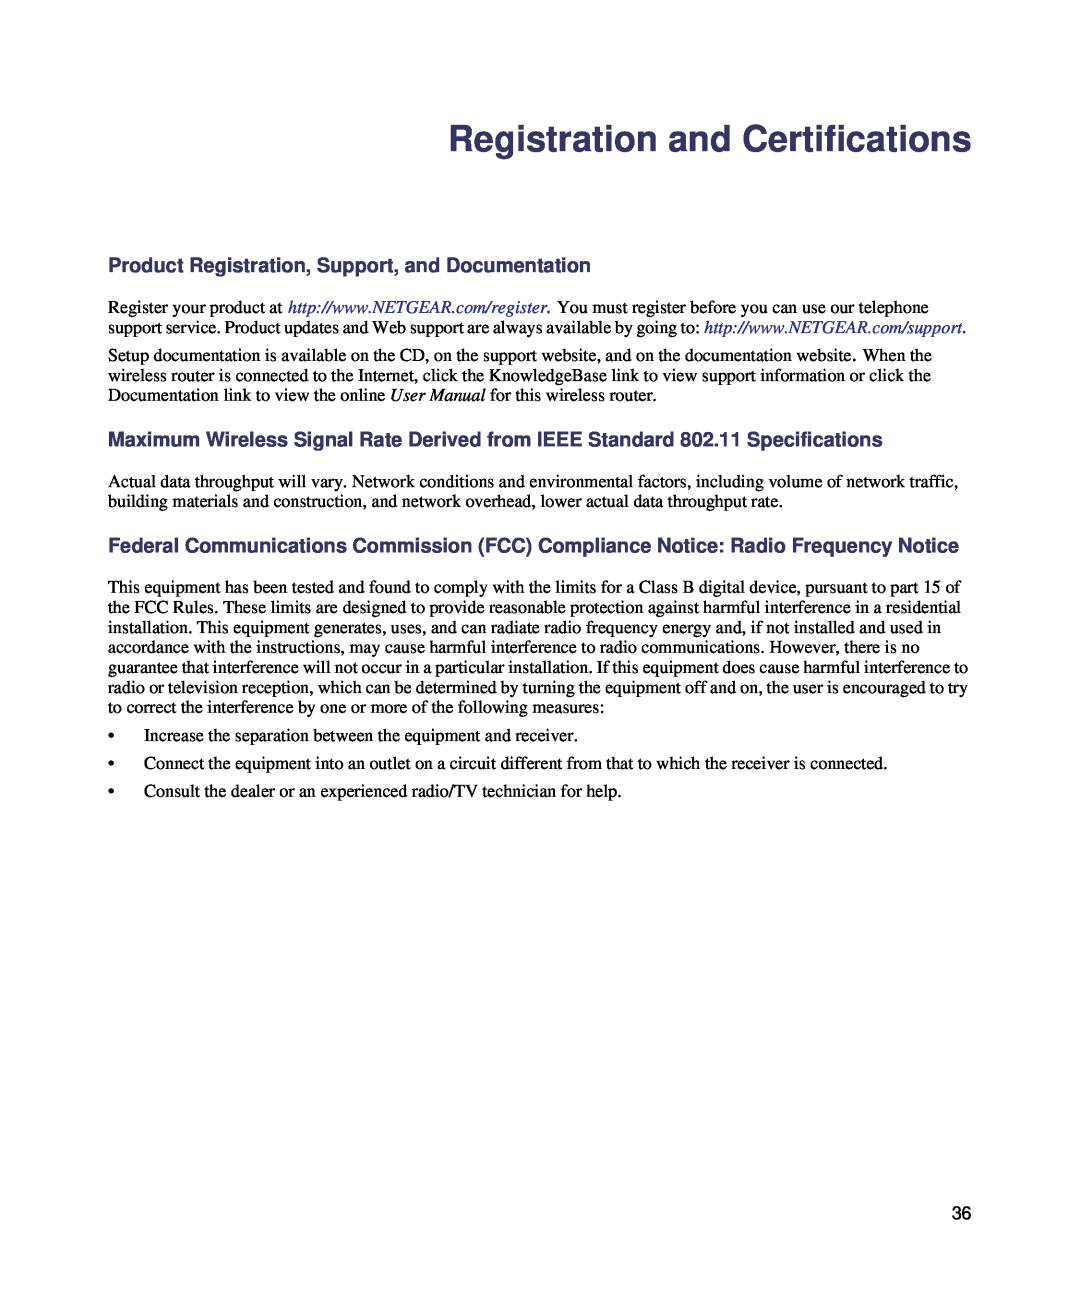 NETGEAR N150, WNR1000 manual Registration and Certifications 